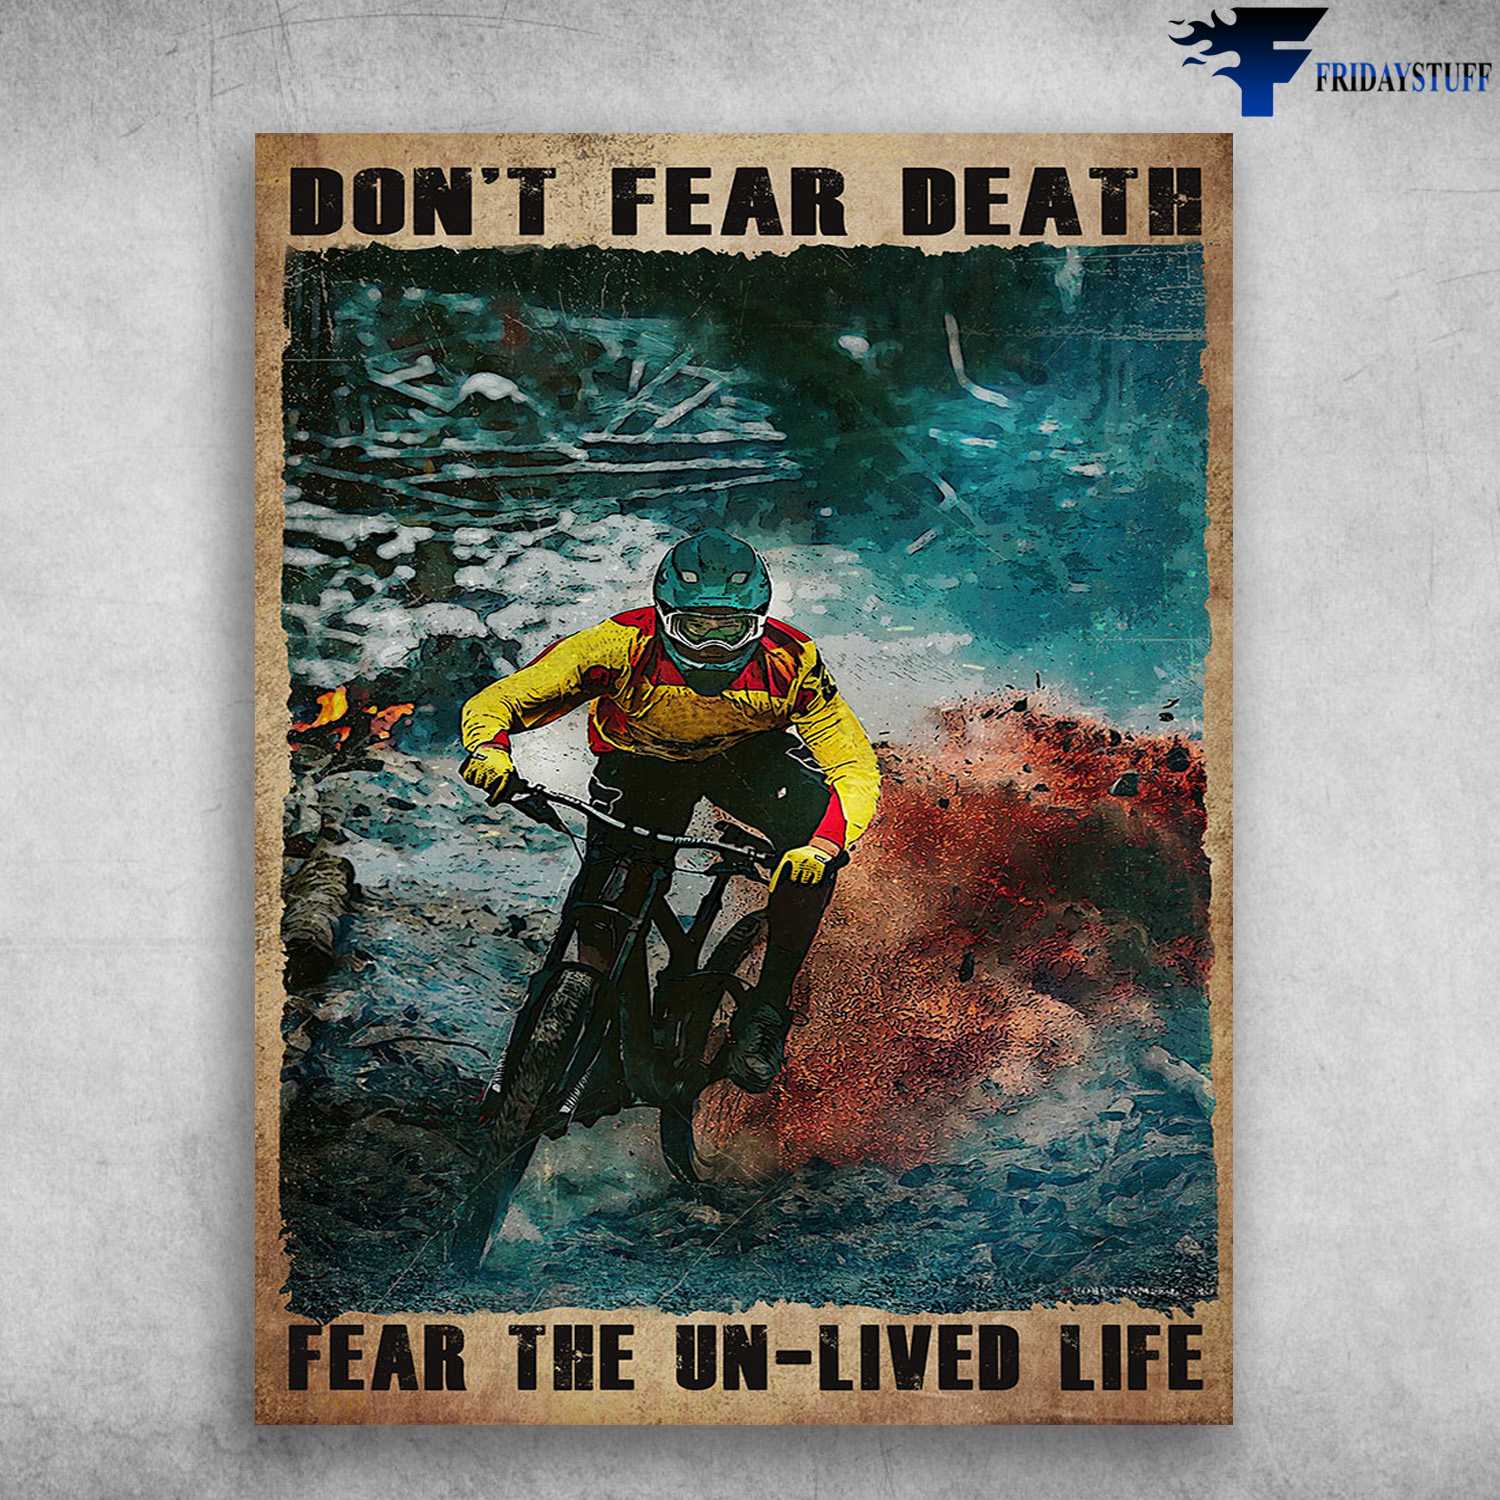 Mountain Biking, Biker Poster - Don't Fear Death, Fear The Un-Lived Life